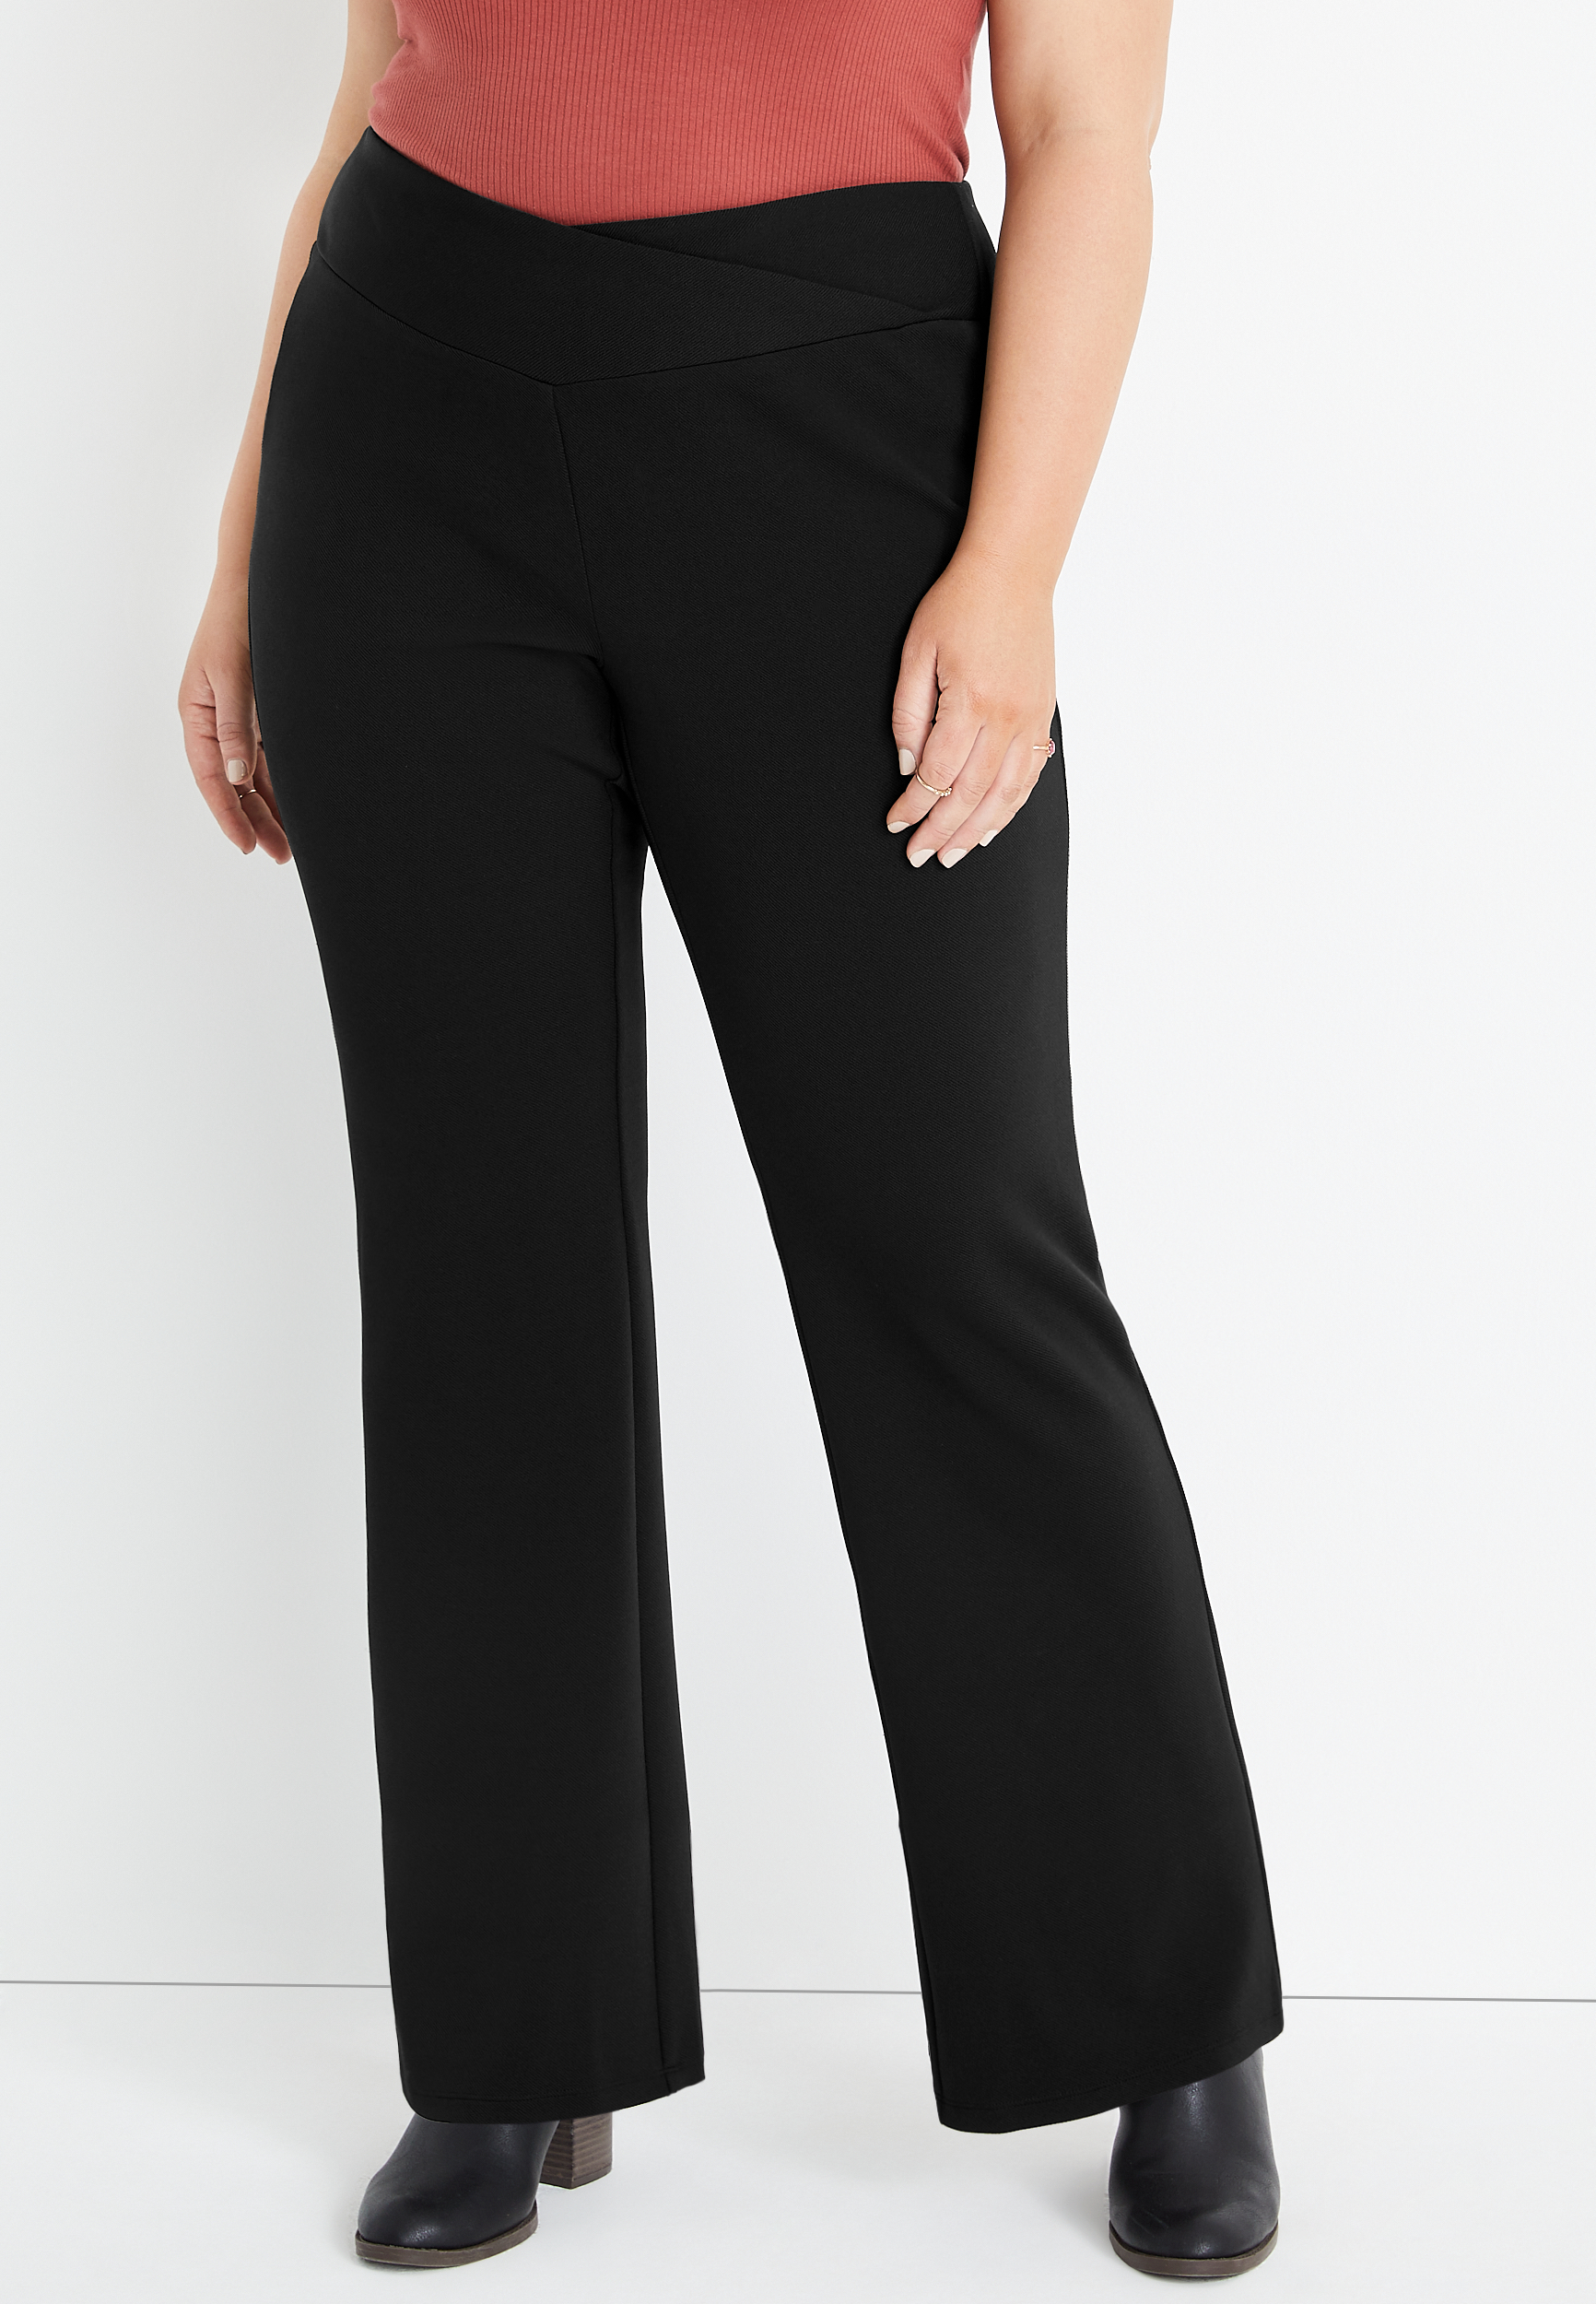 MRULIC pants for women Dress Pants Womens Black Work Pants Solid